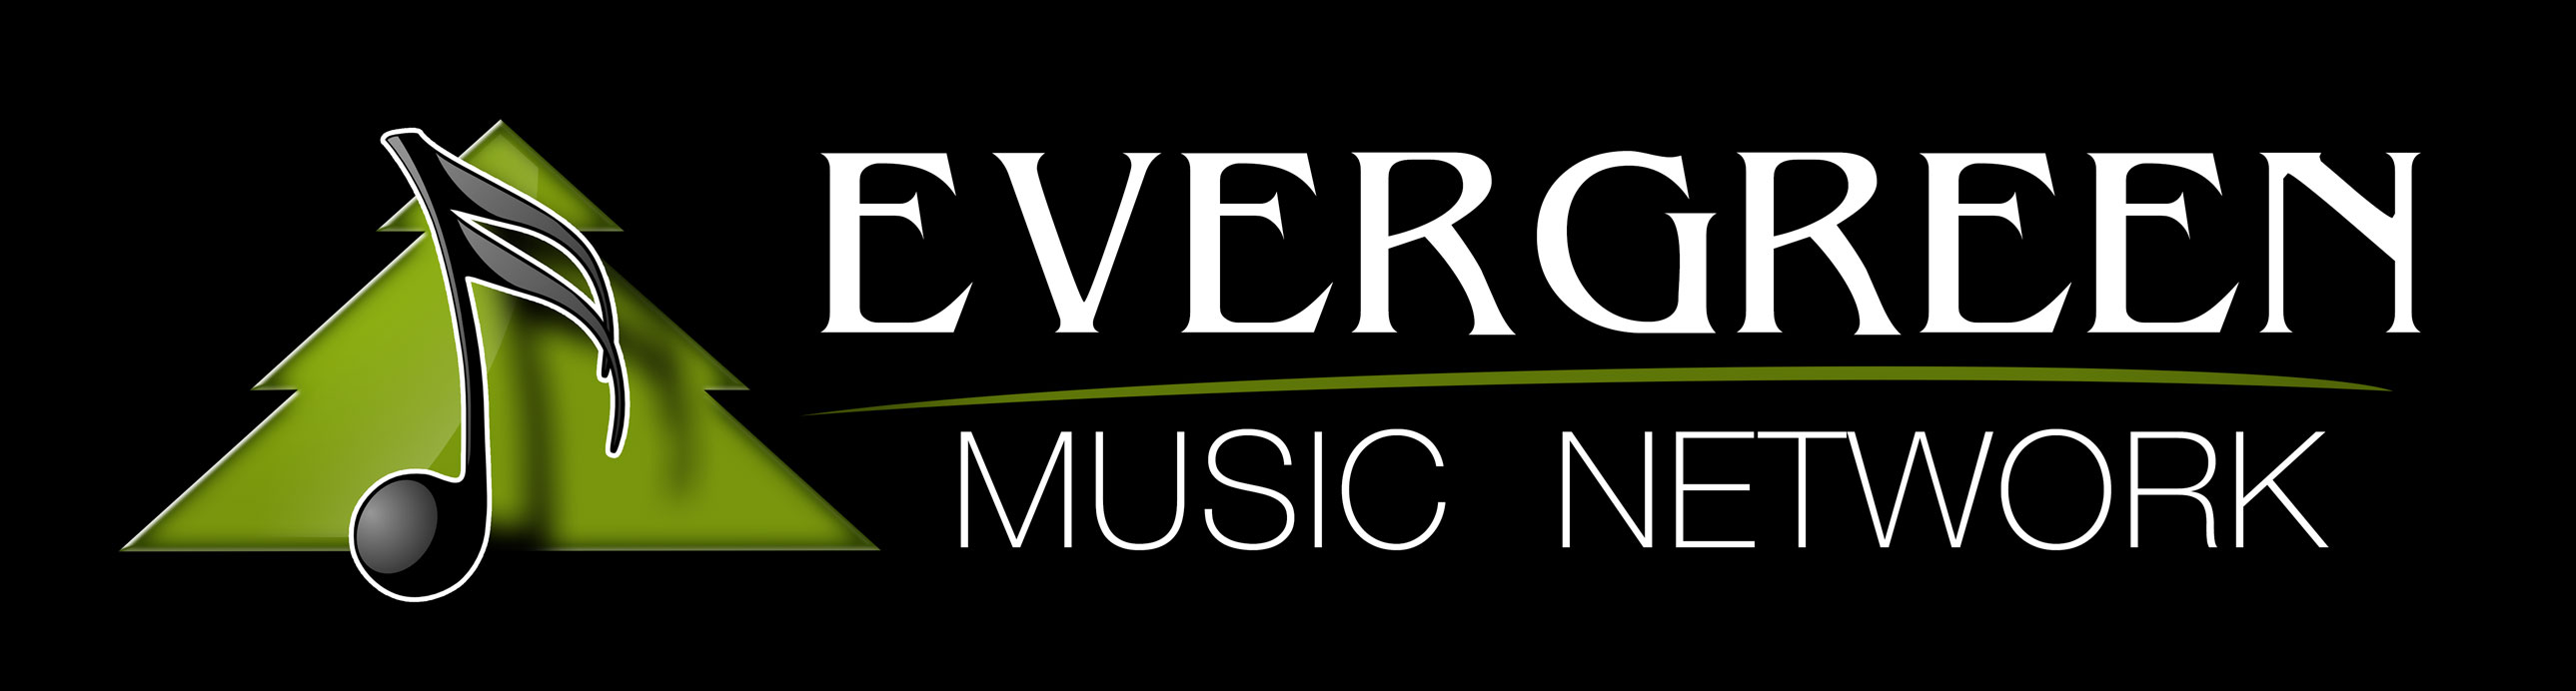 Evergreen Music Network Logo